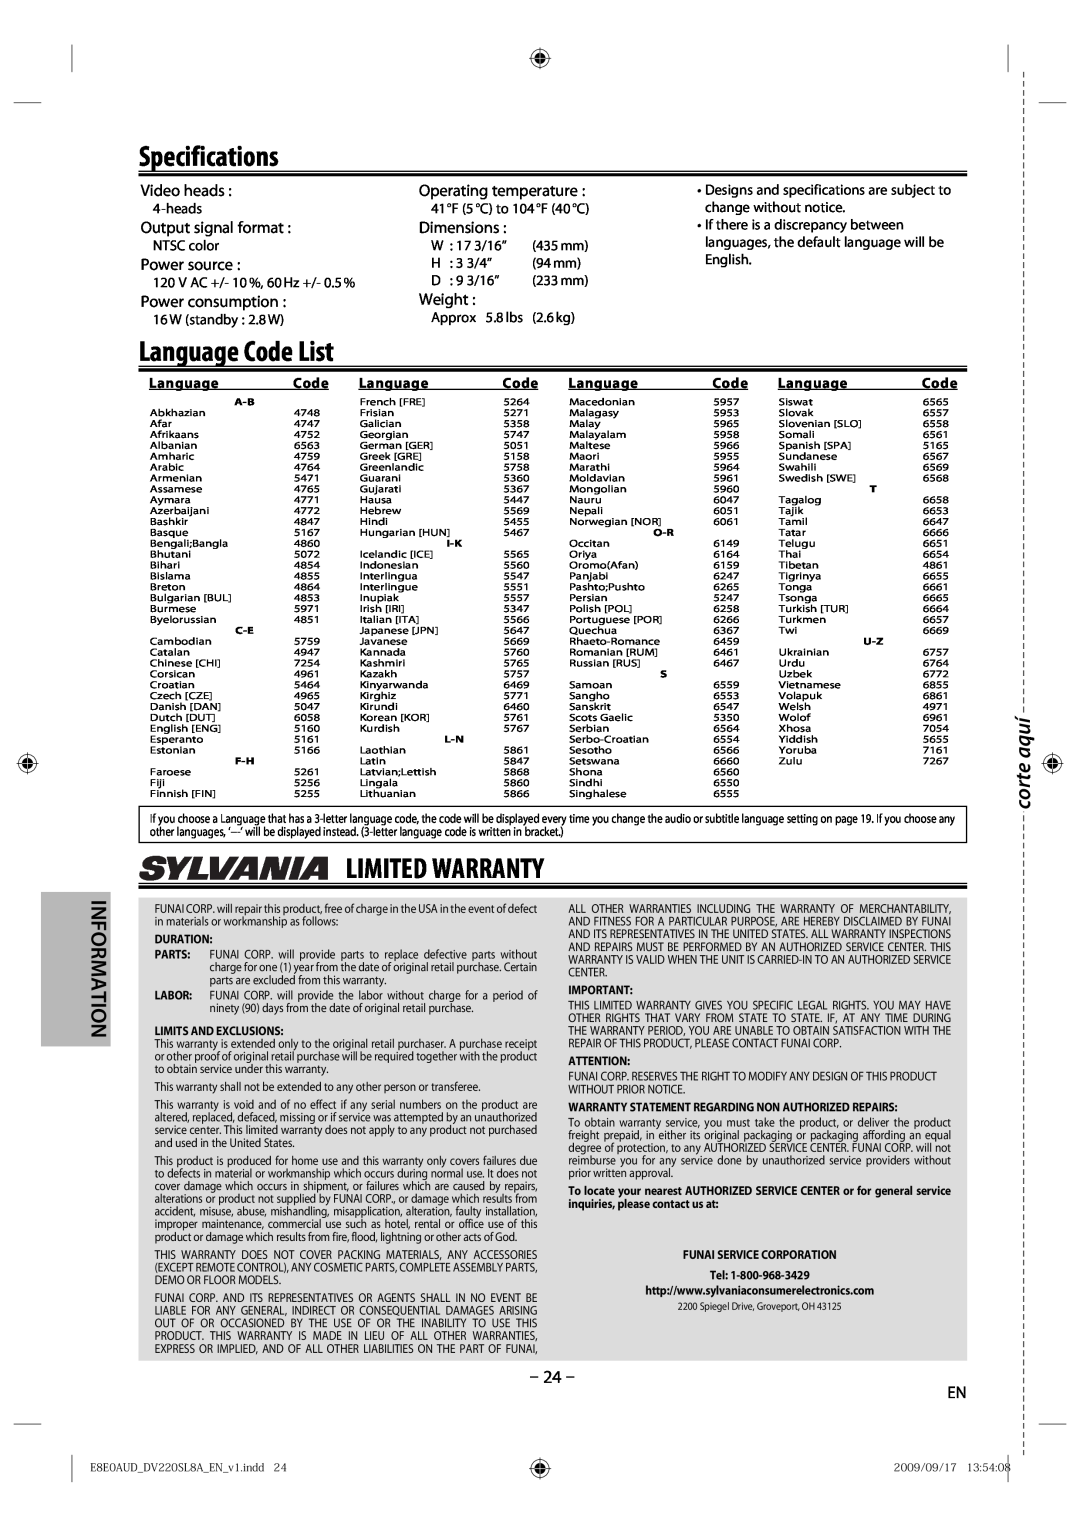 Sylvania DV220SL8 A owner manual Specifications, Limited Warranty, corte aquí, Language Code List, Information 